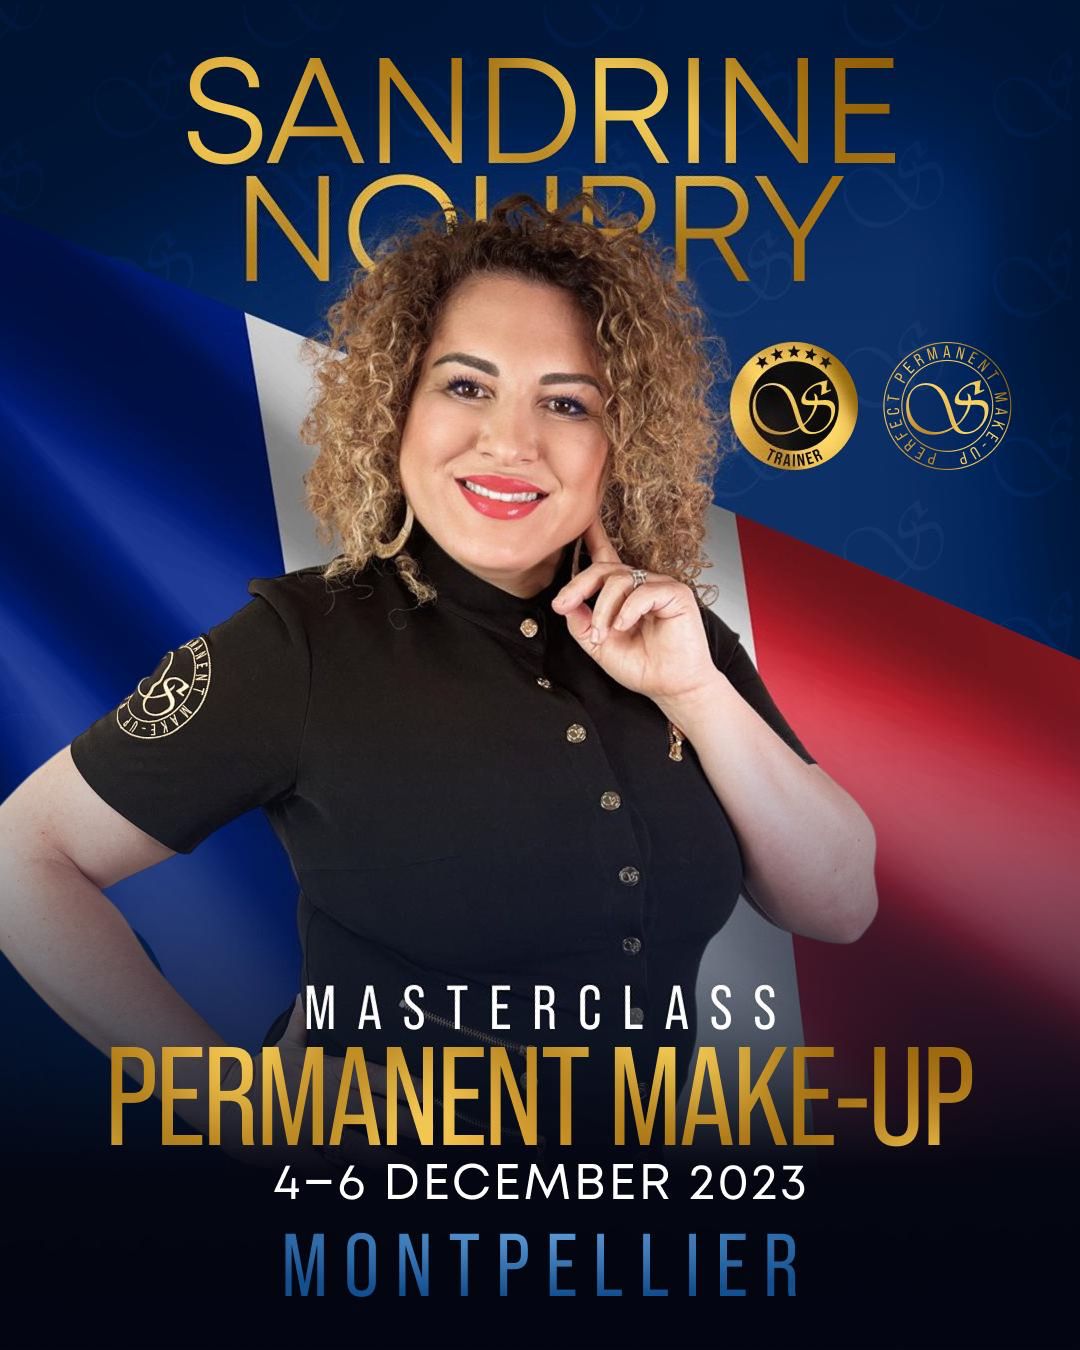 <br />
Formation Masterclass Maquillage permanent à Montpellier décembre 2023 - Sandrine Nourry Sviatoacademy Trainer